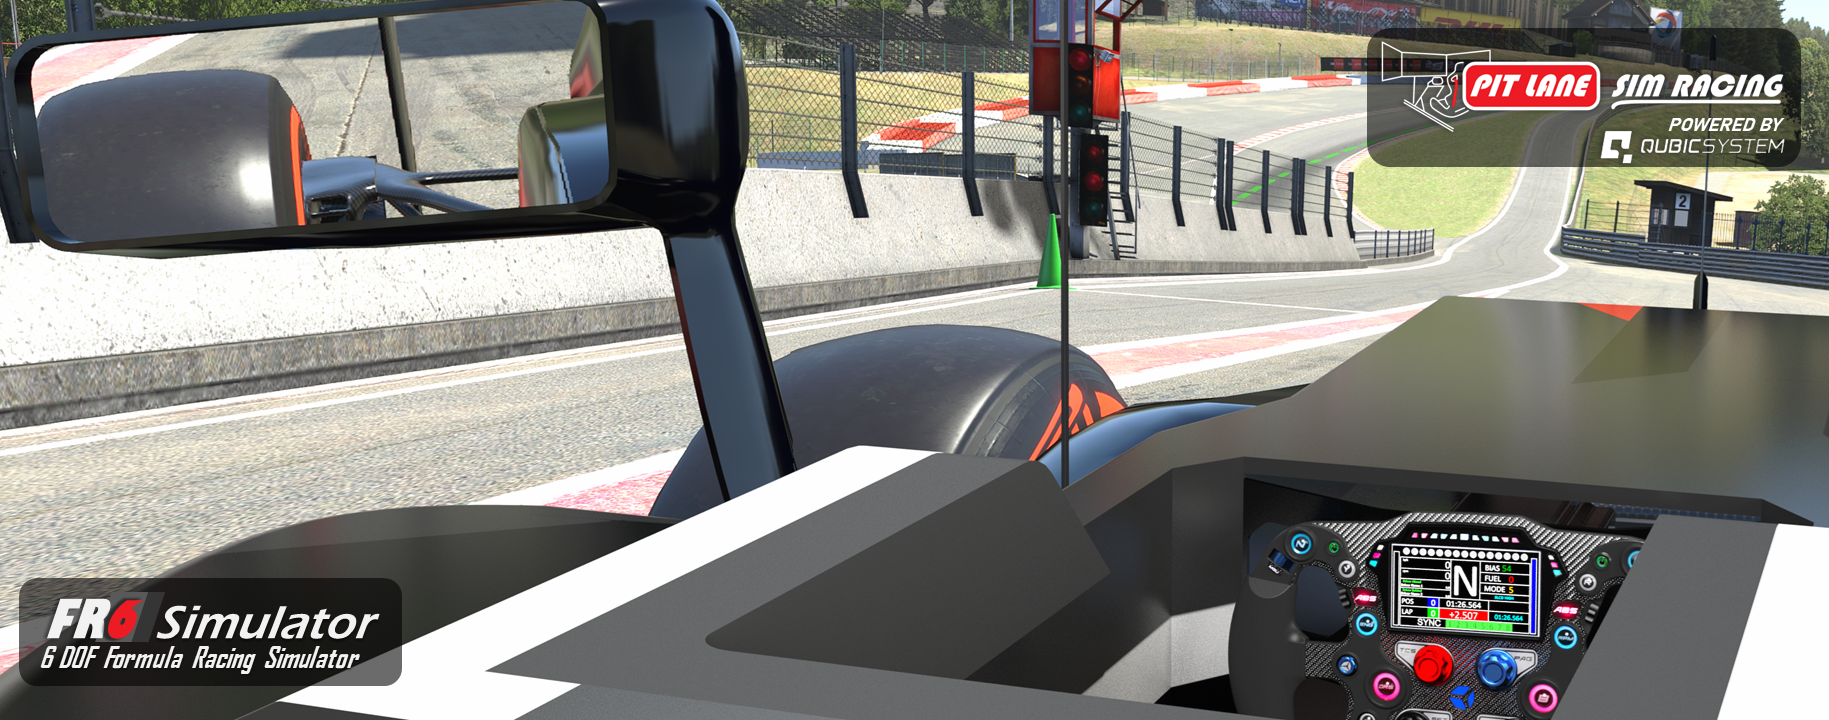 Pit Lane Sim Racing FR6 6 DOF Formula Racing Simulator